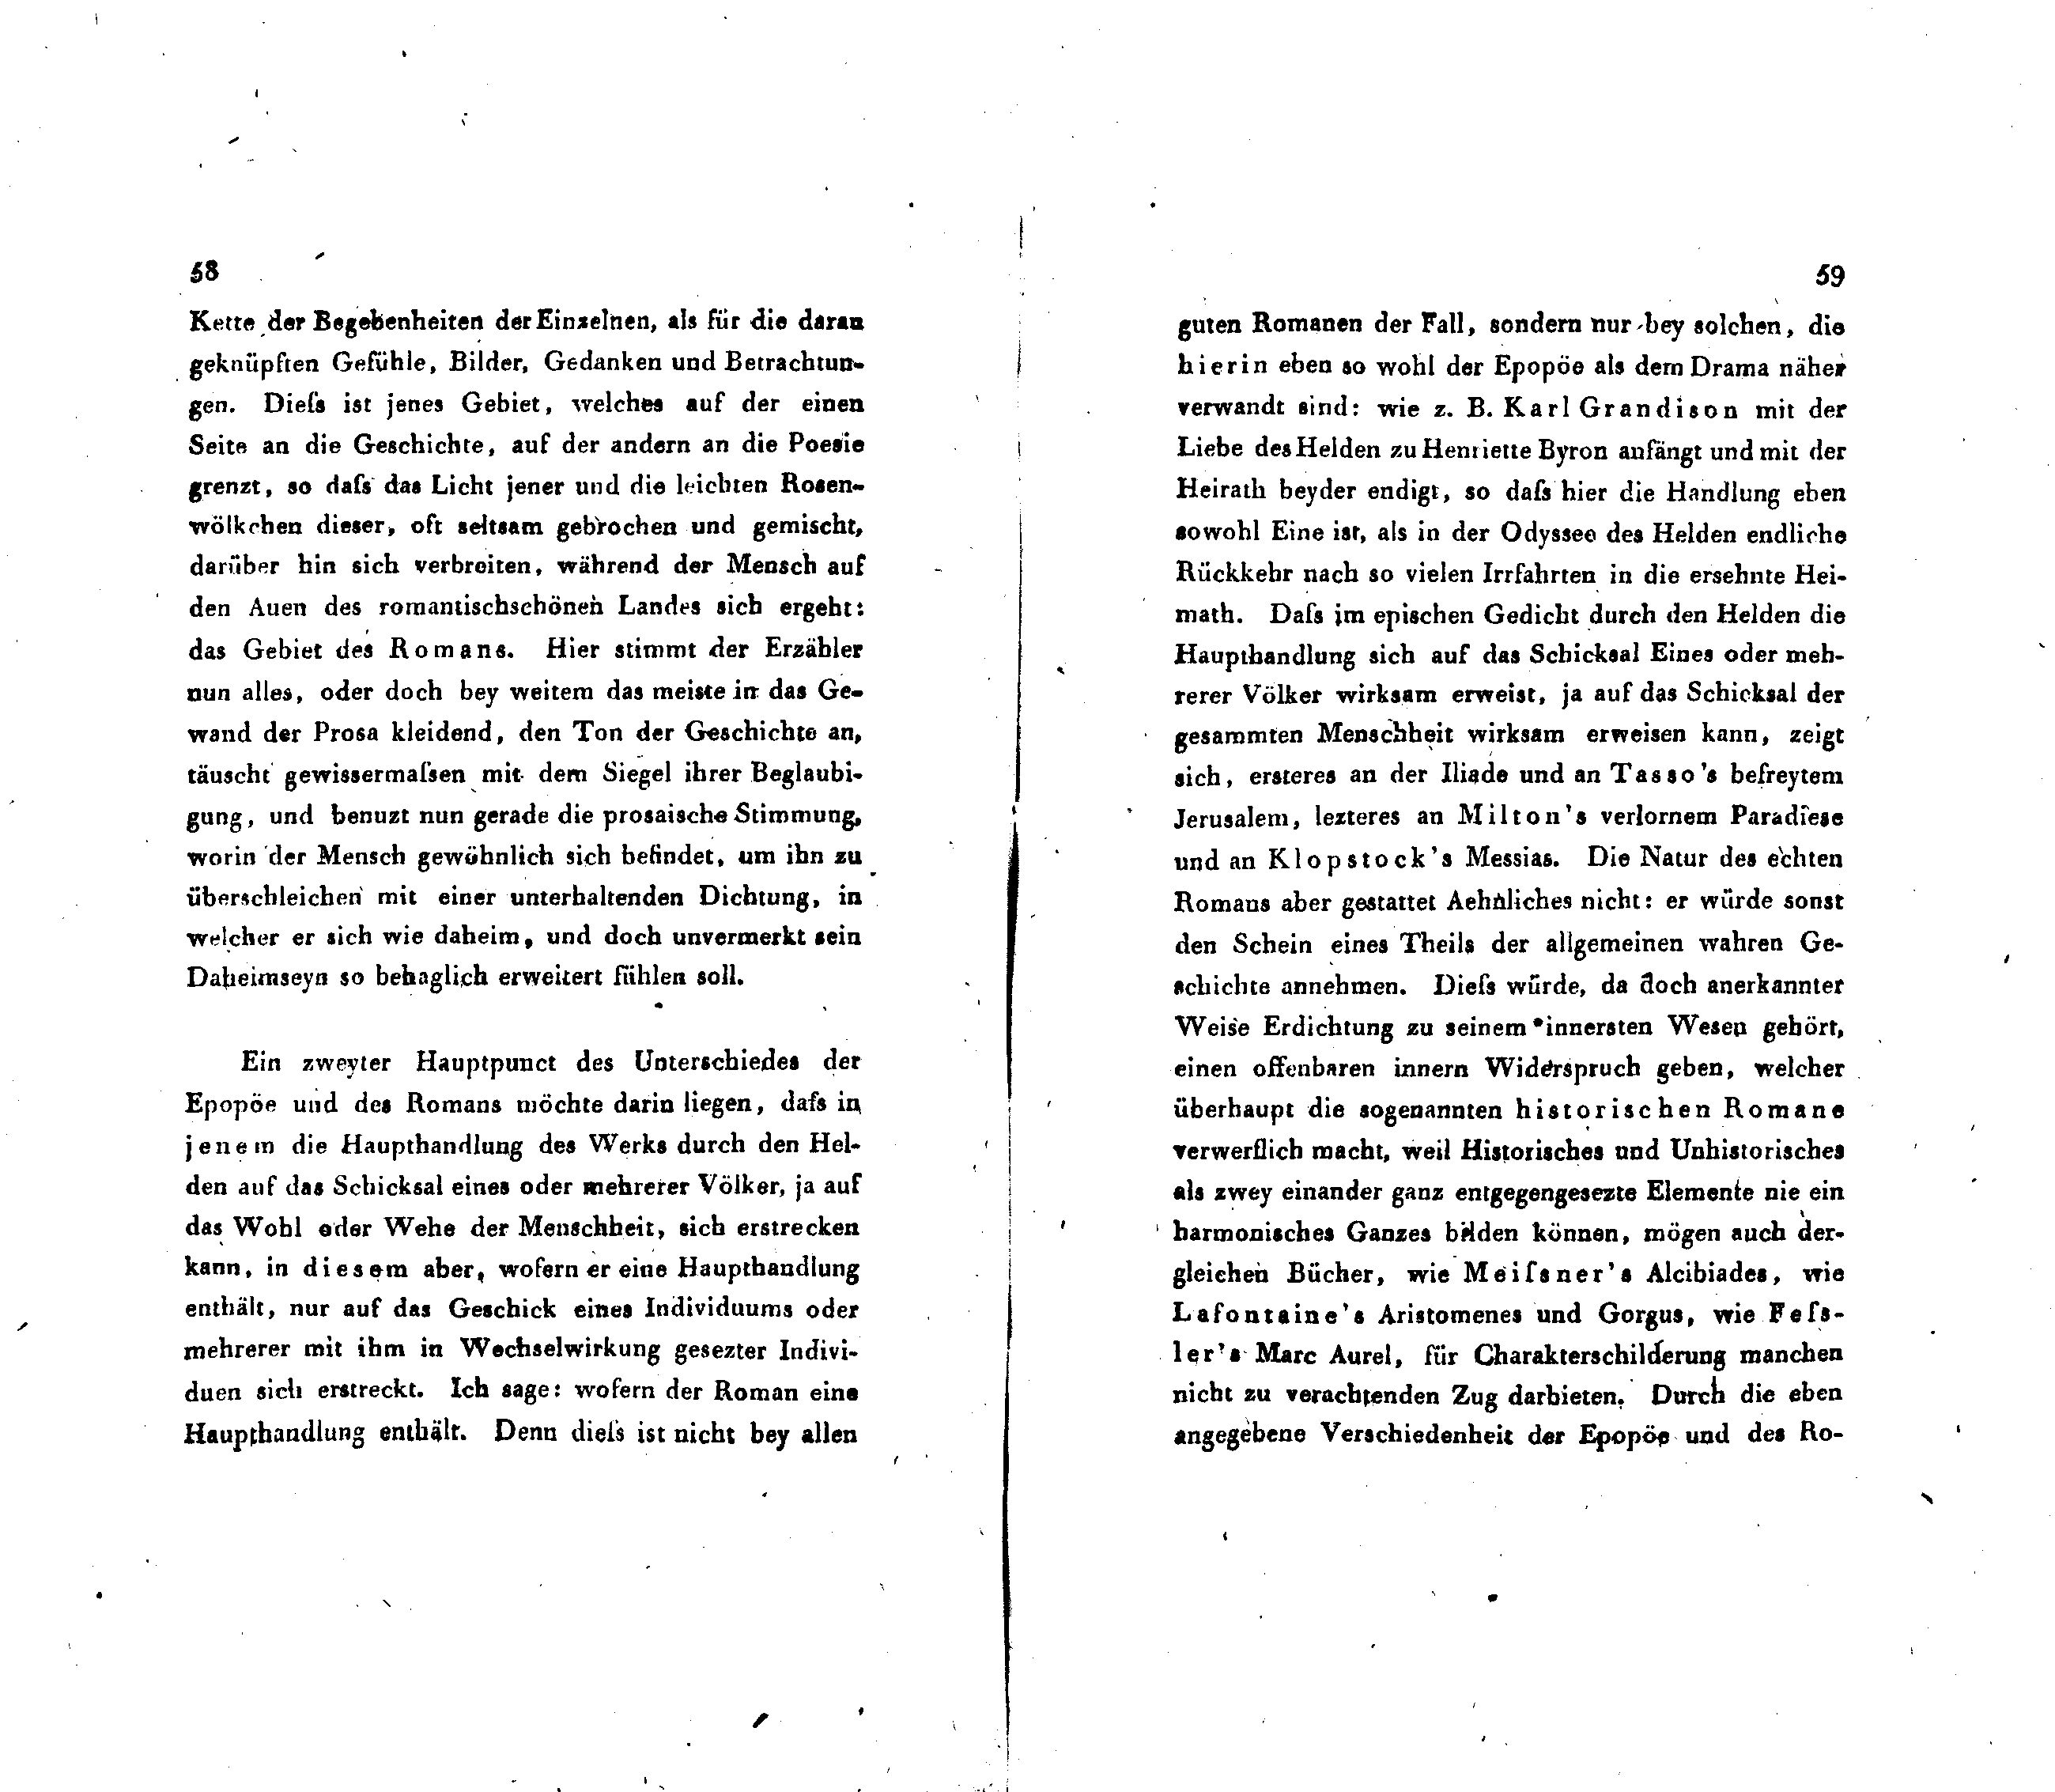 Inländisches Museum [1/2] (1820) | 33. (58-59) Main body of text